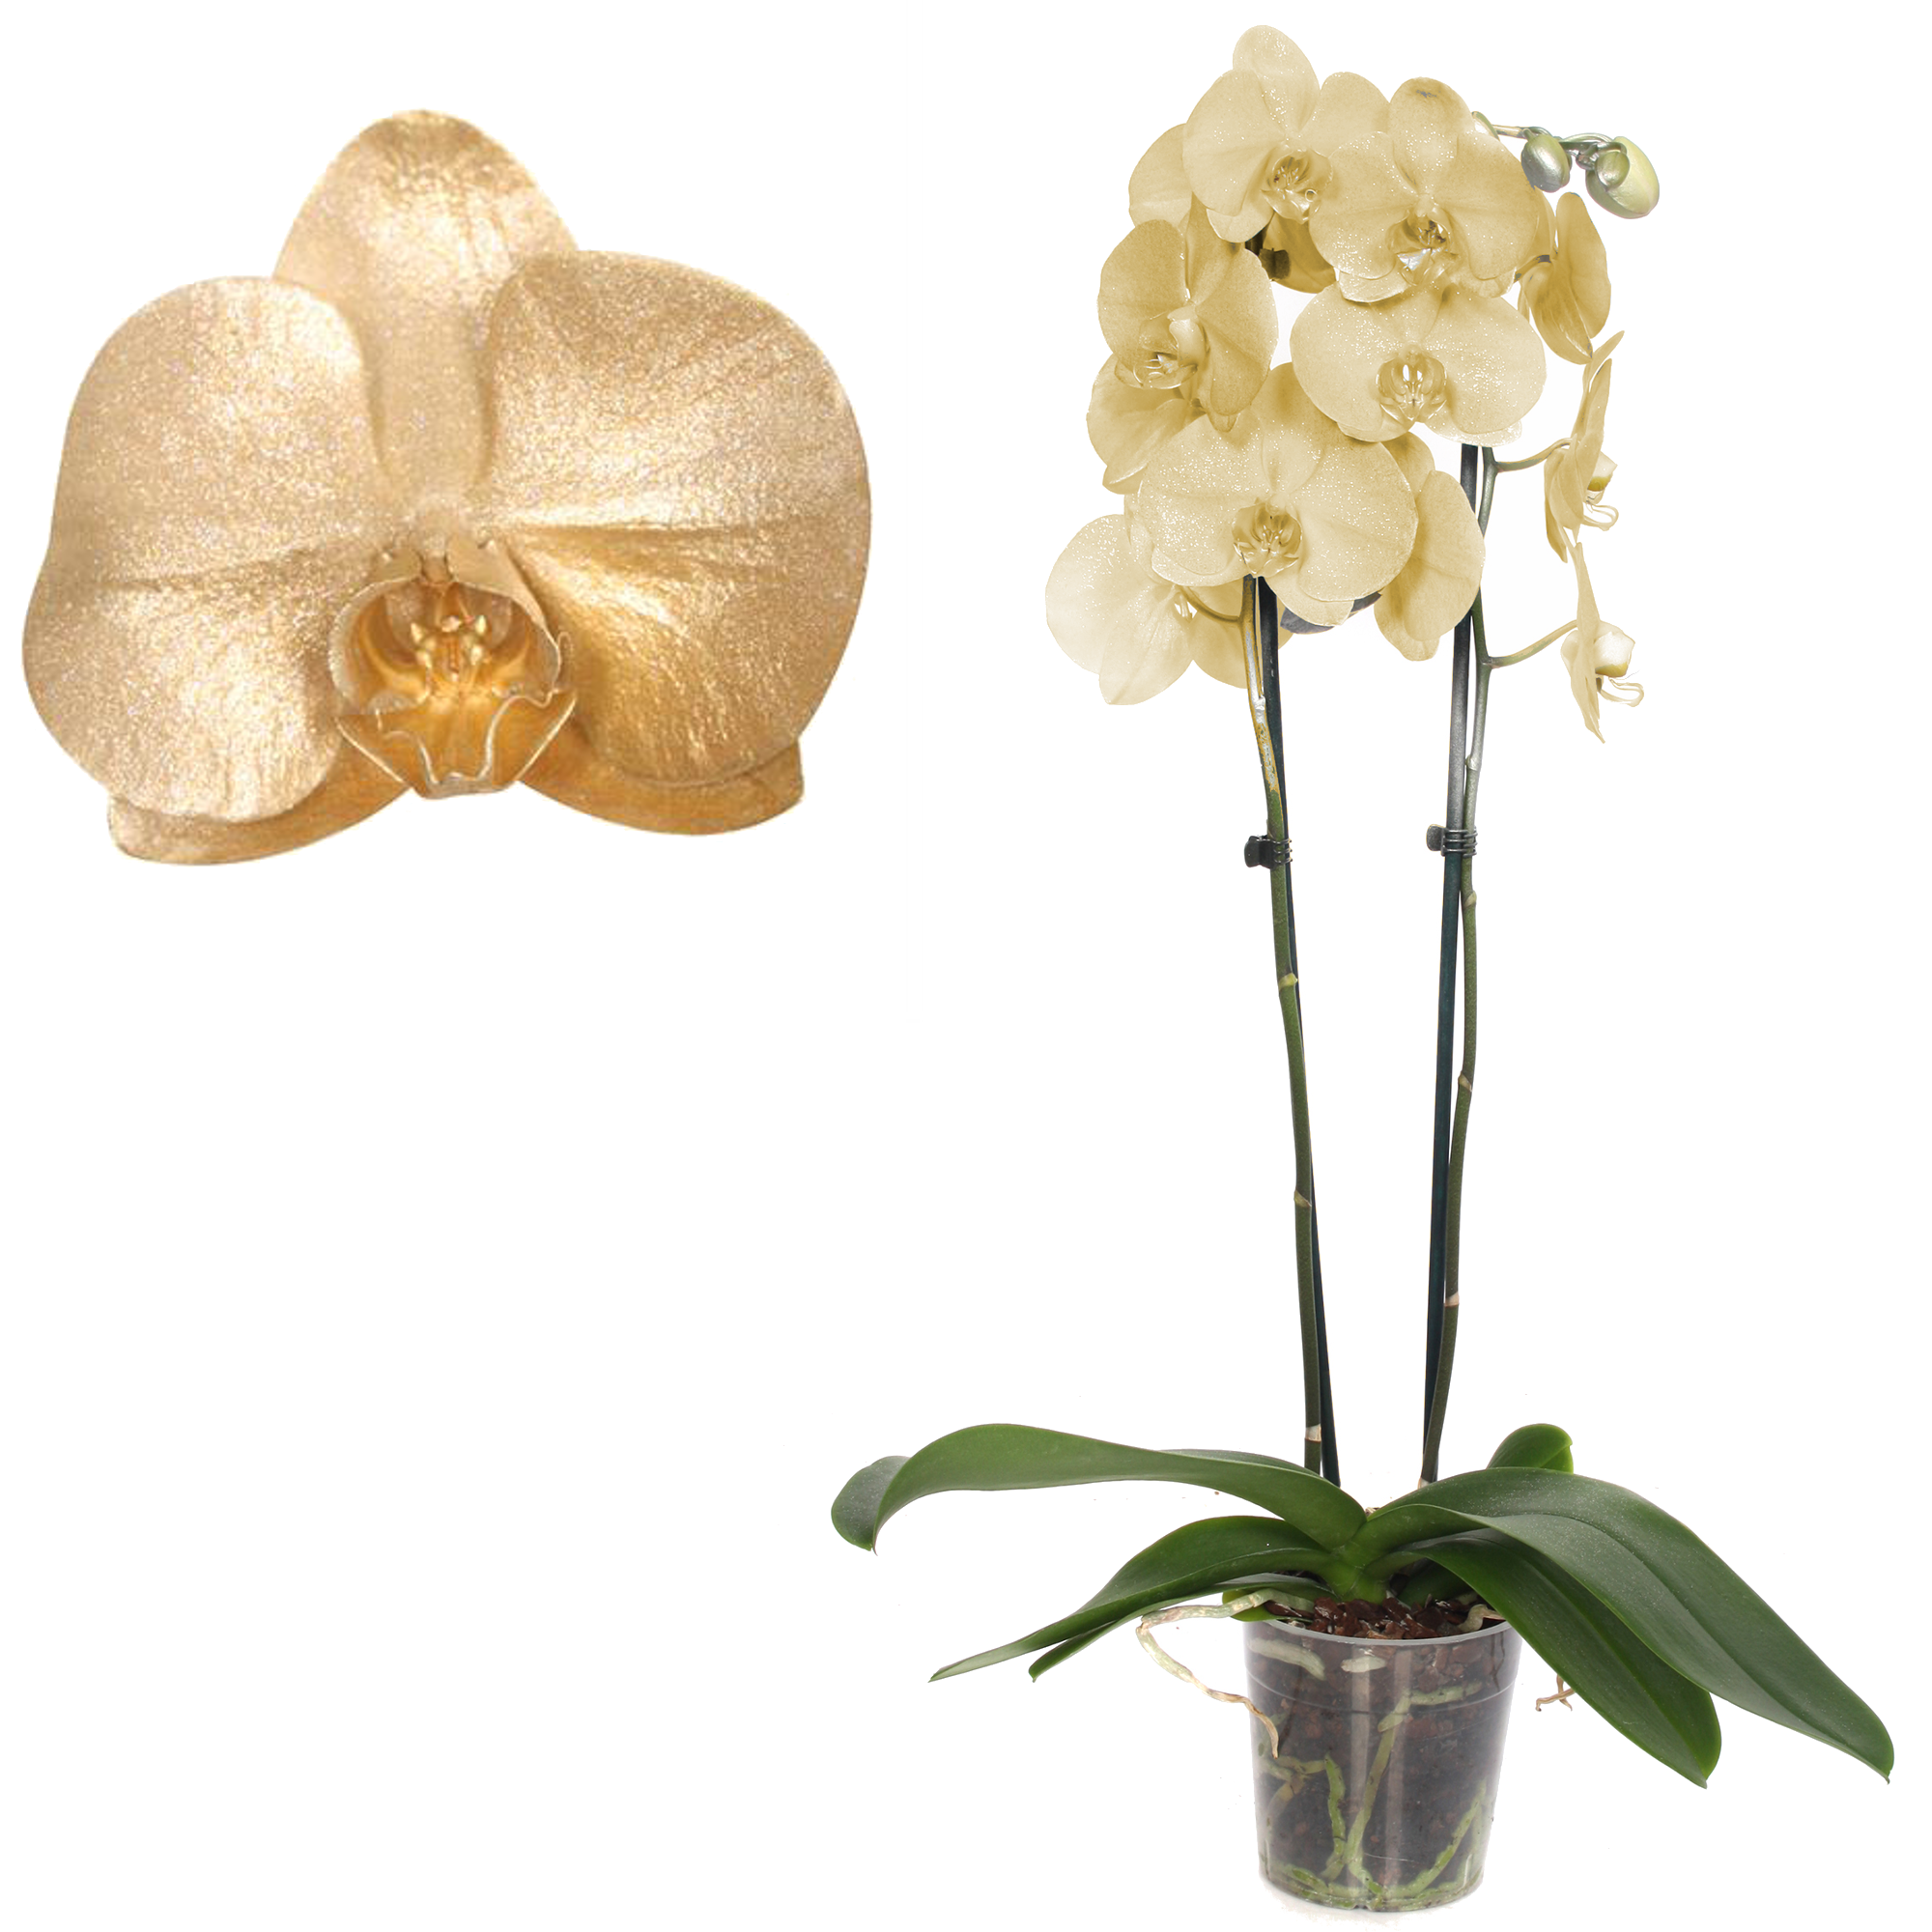 Schmetterlingsorchidee 'Royal Metallic Gold' 2 Rispen gold 12 cm Topf + product picture